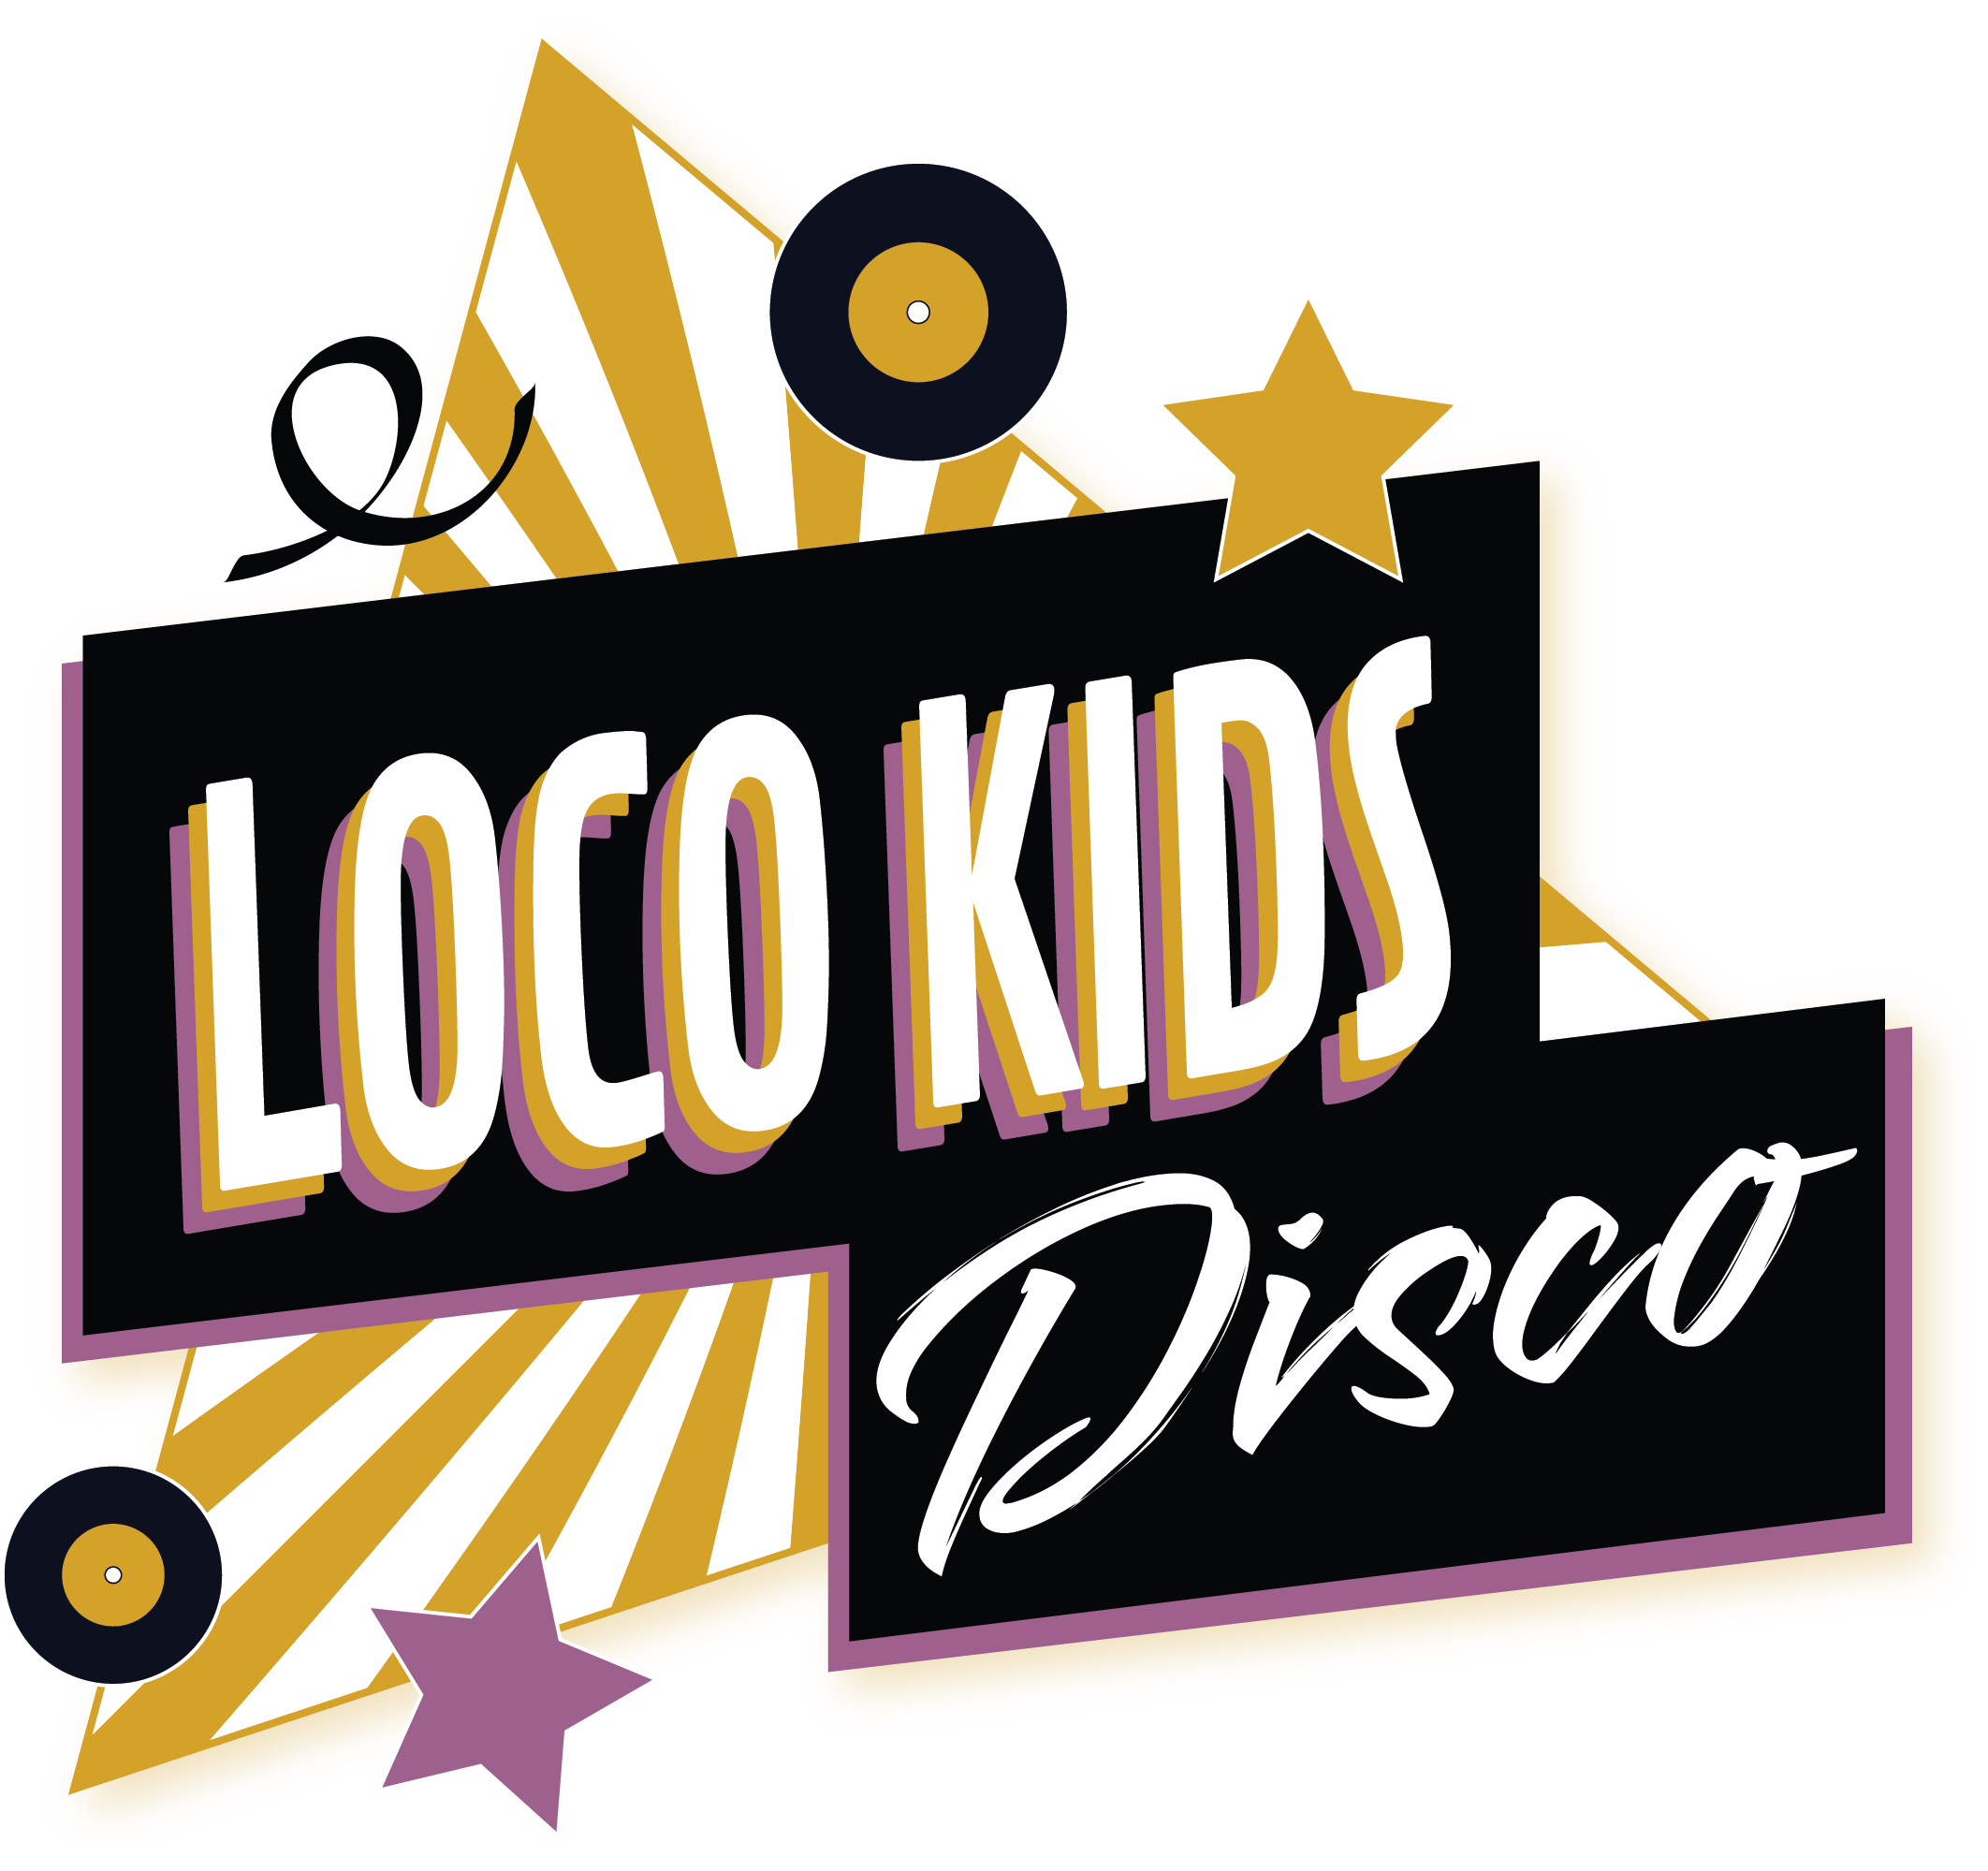 LOCO KIDS DISCO - Presspic logo